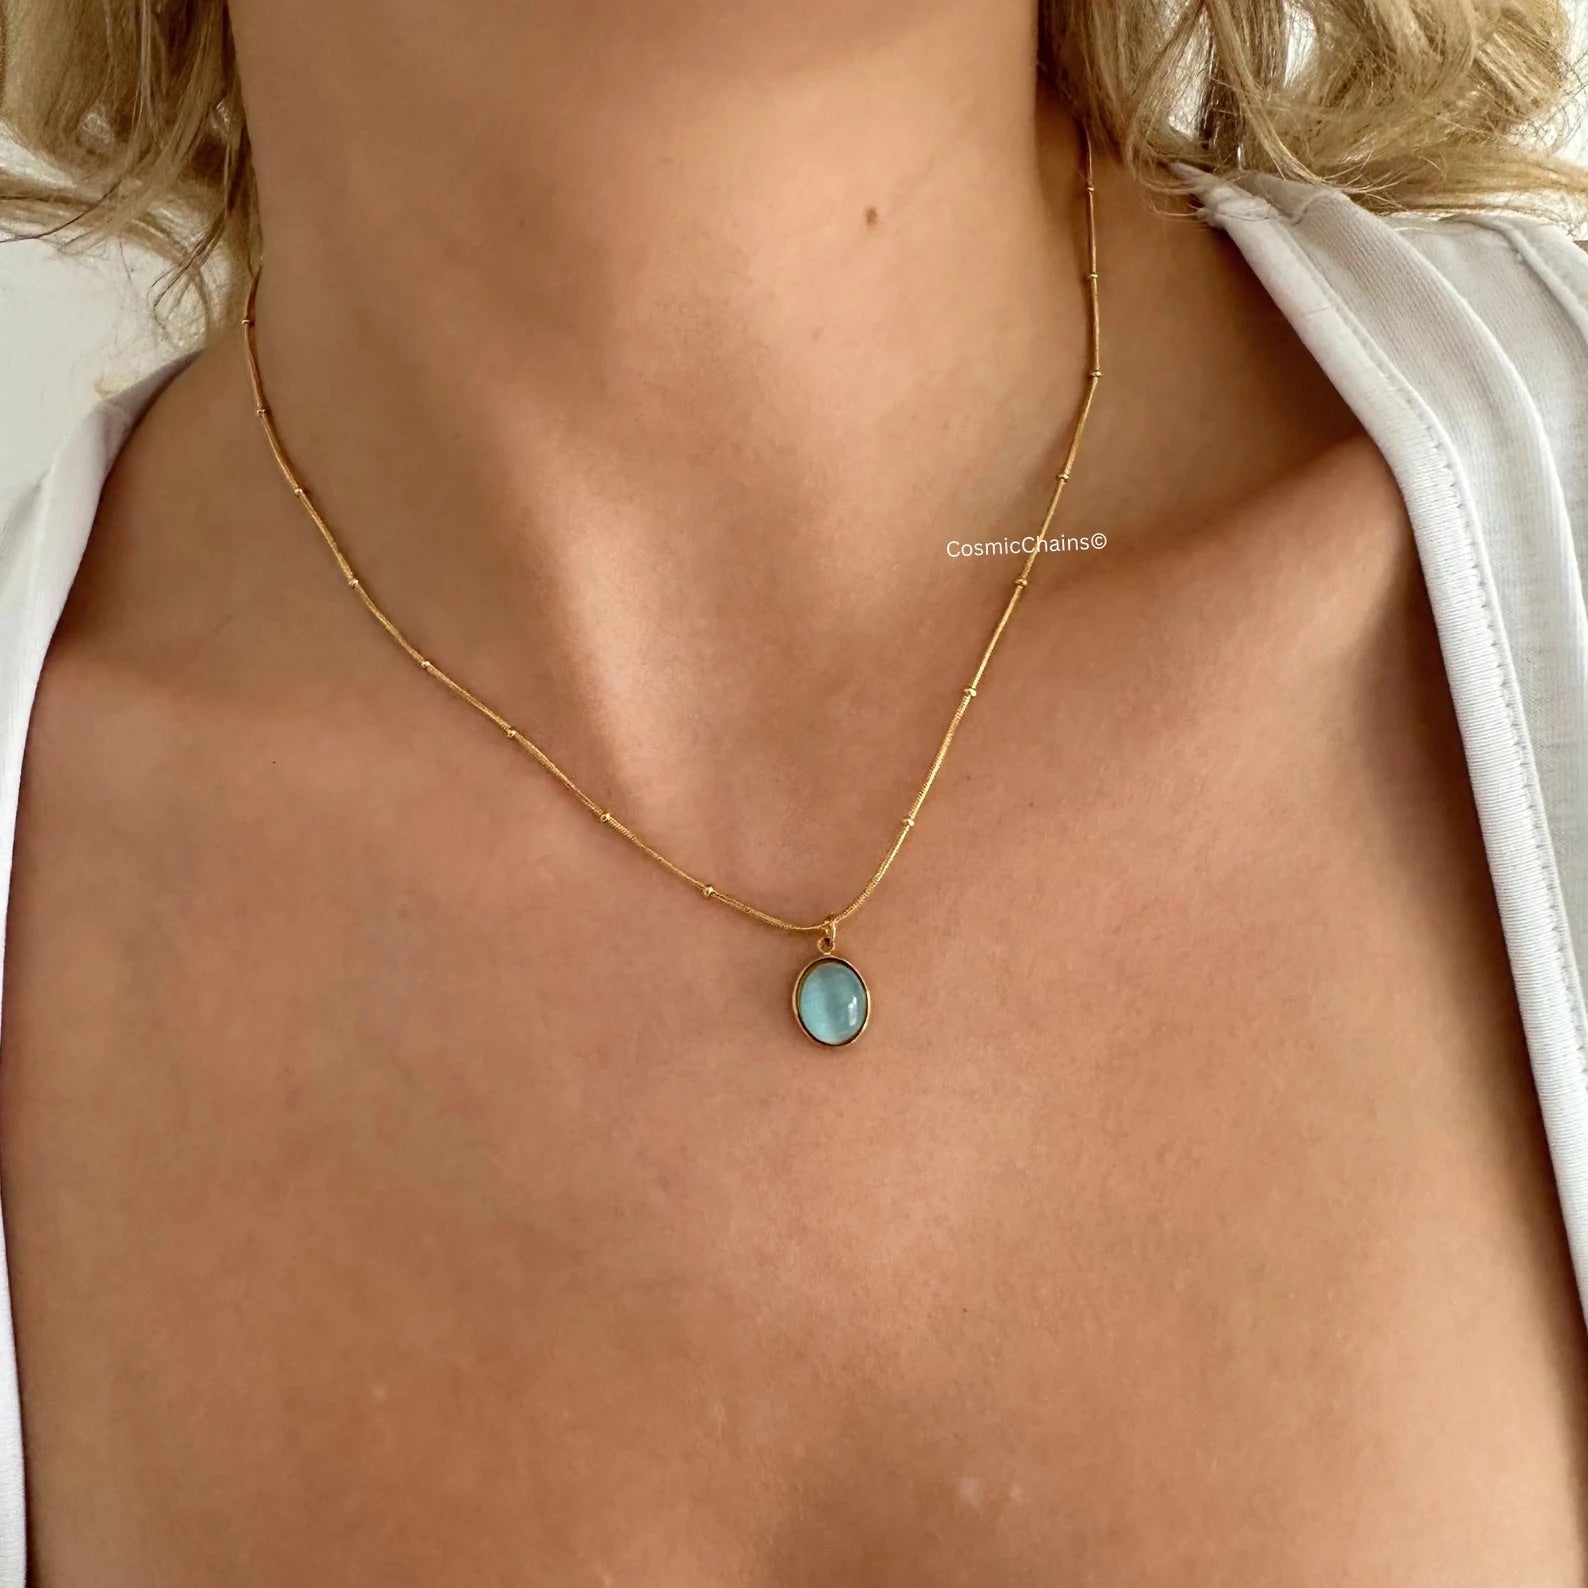 Blue Pendant Necklace - Cosmic Chains 